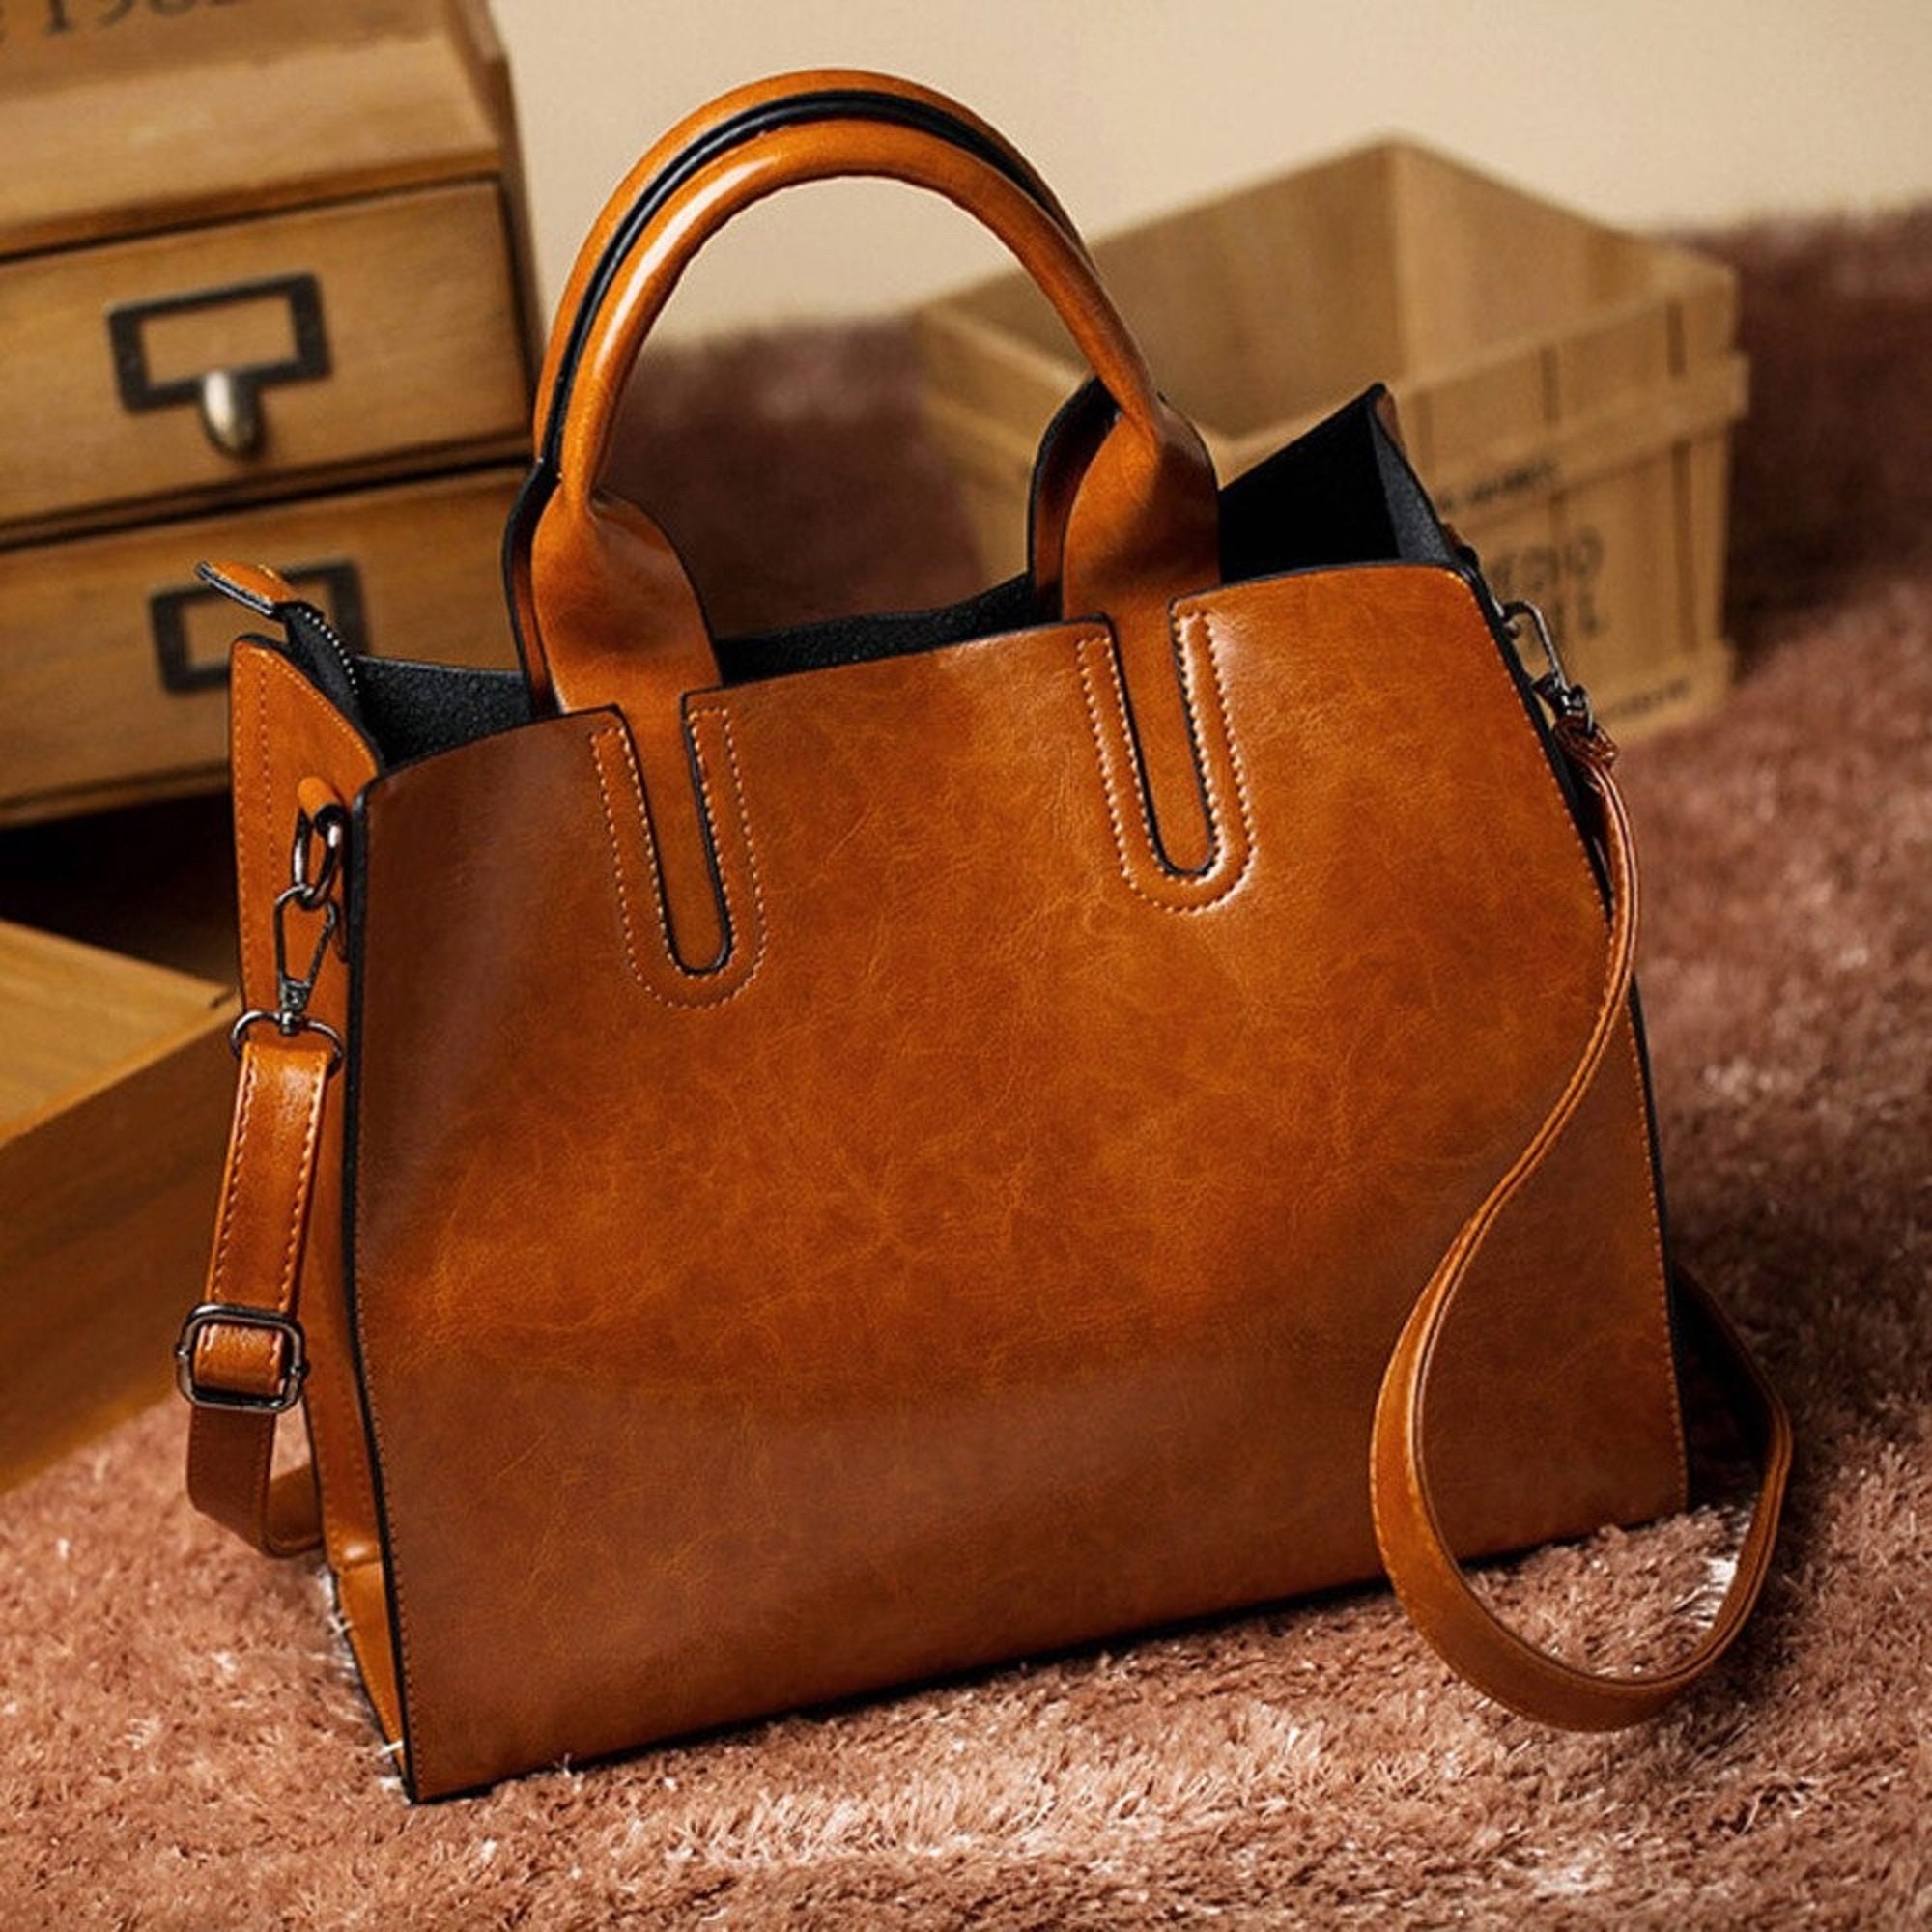 ZiMing Women's Glossy Patent Leather Handbags